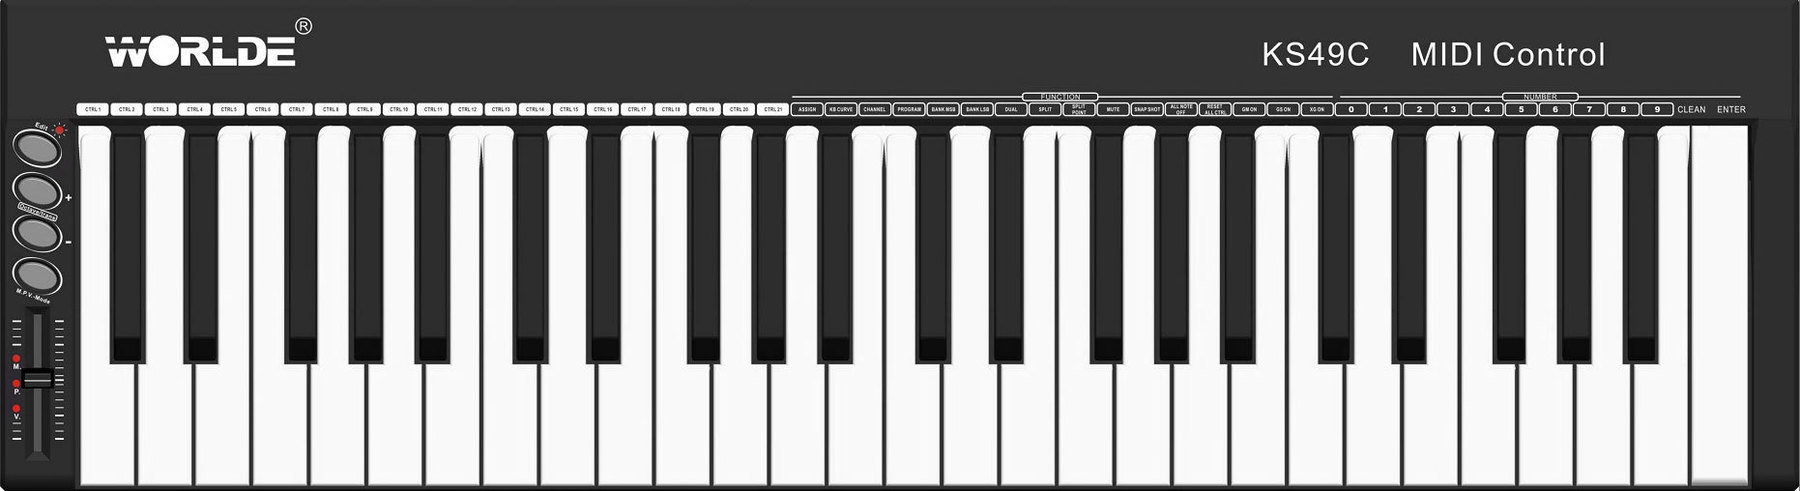 MIDI-Keyboard Worlde KS49C